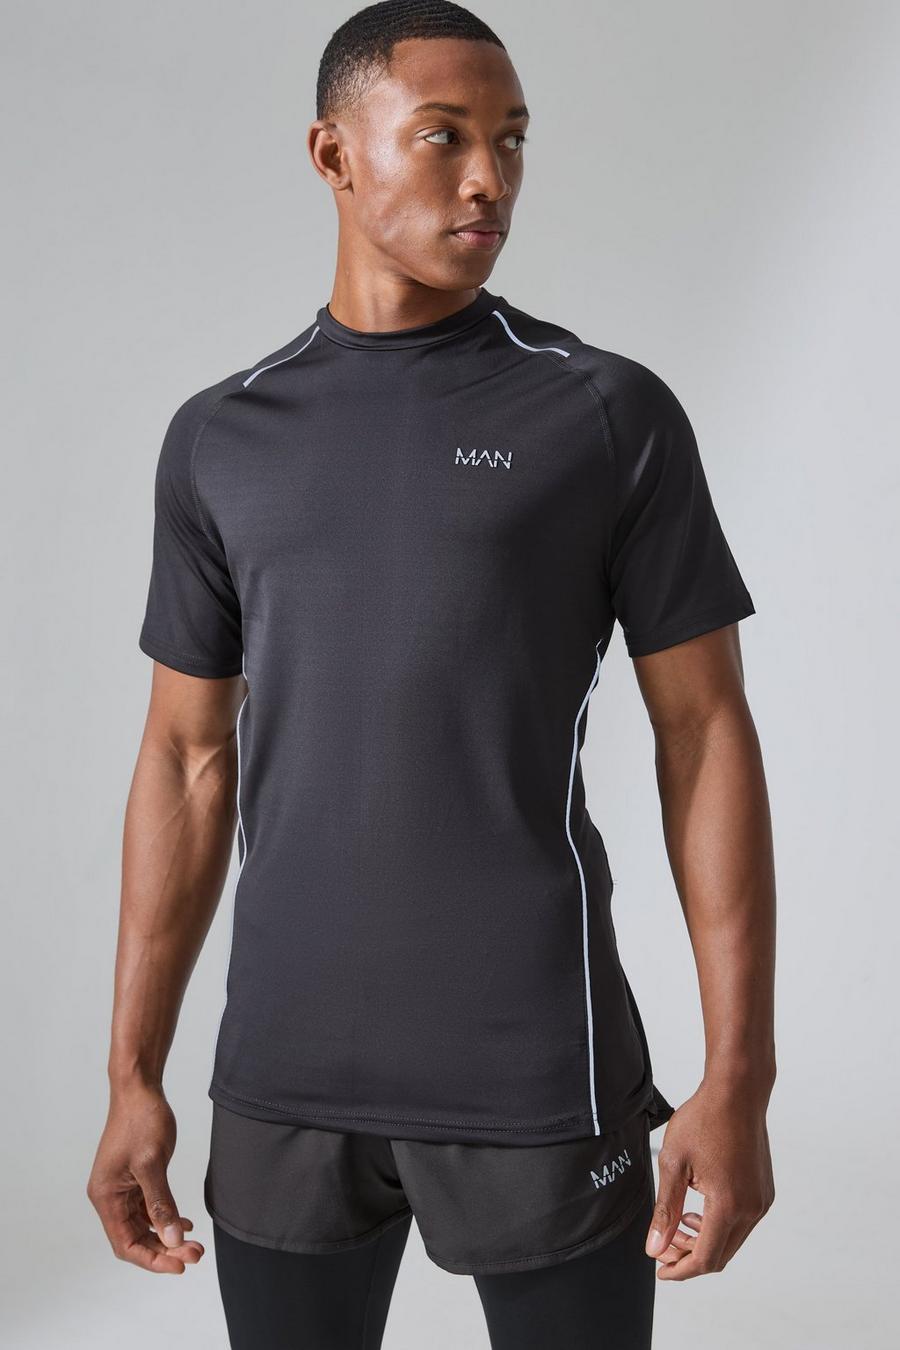 Man Active Muscle-Fit T-Shirt, Black